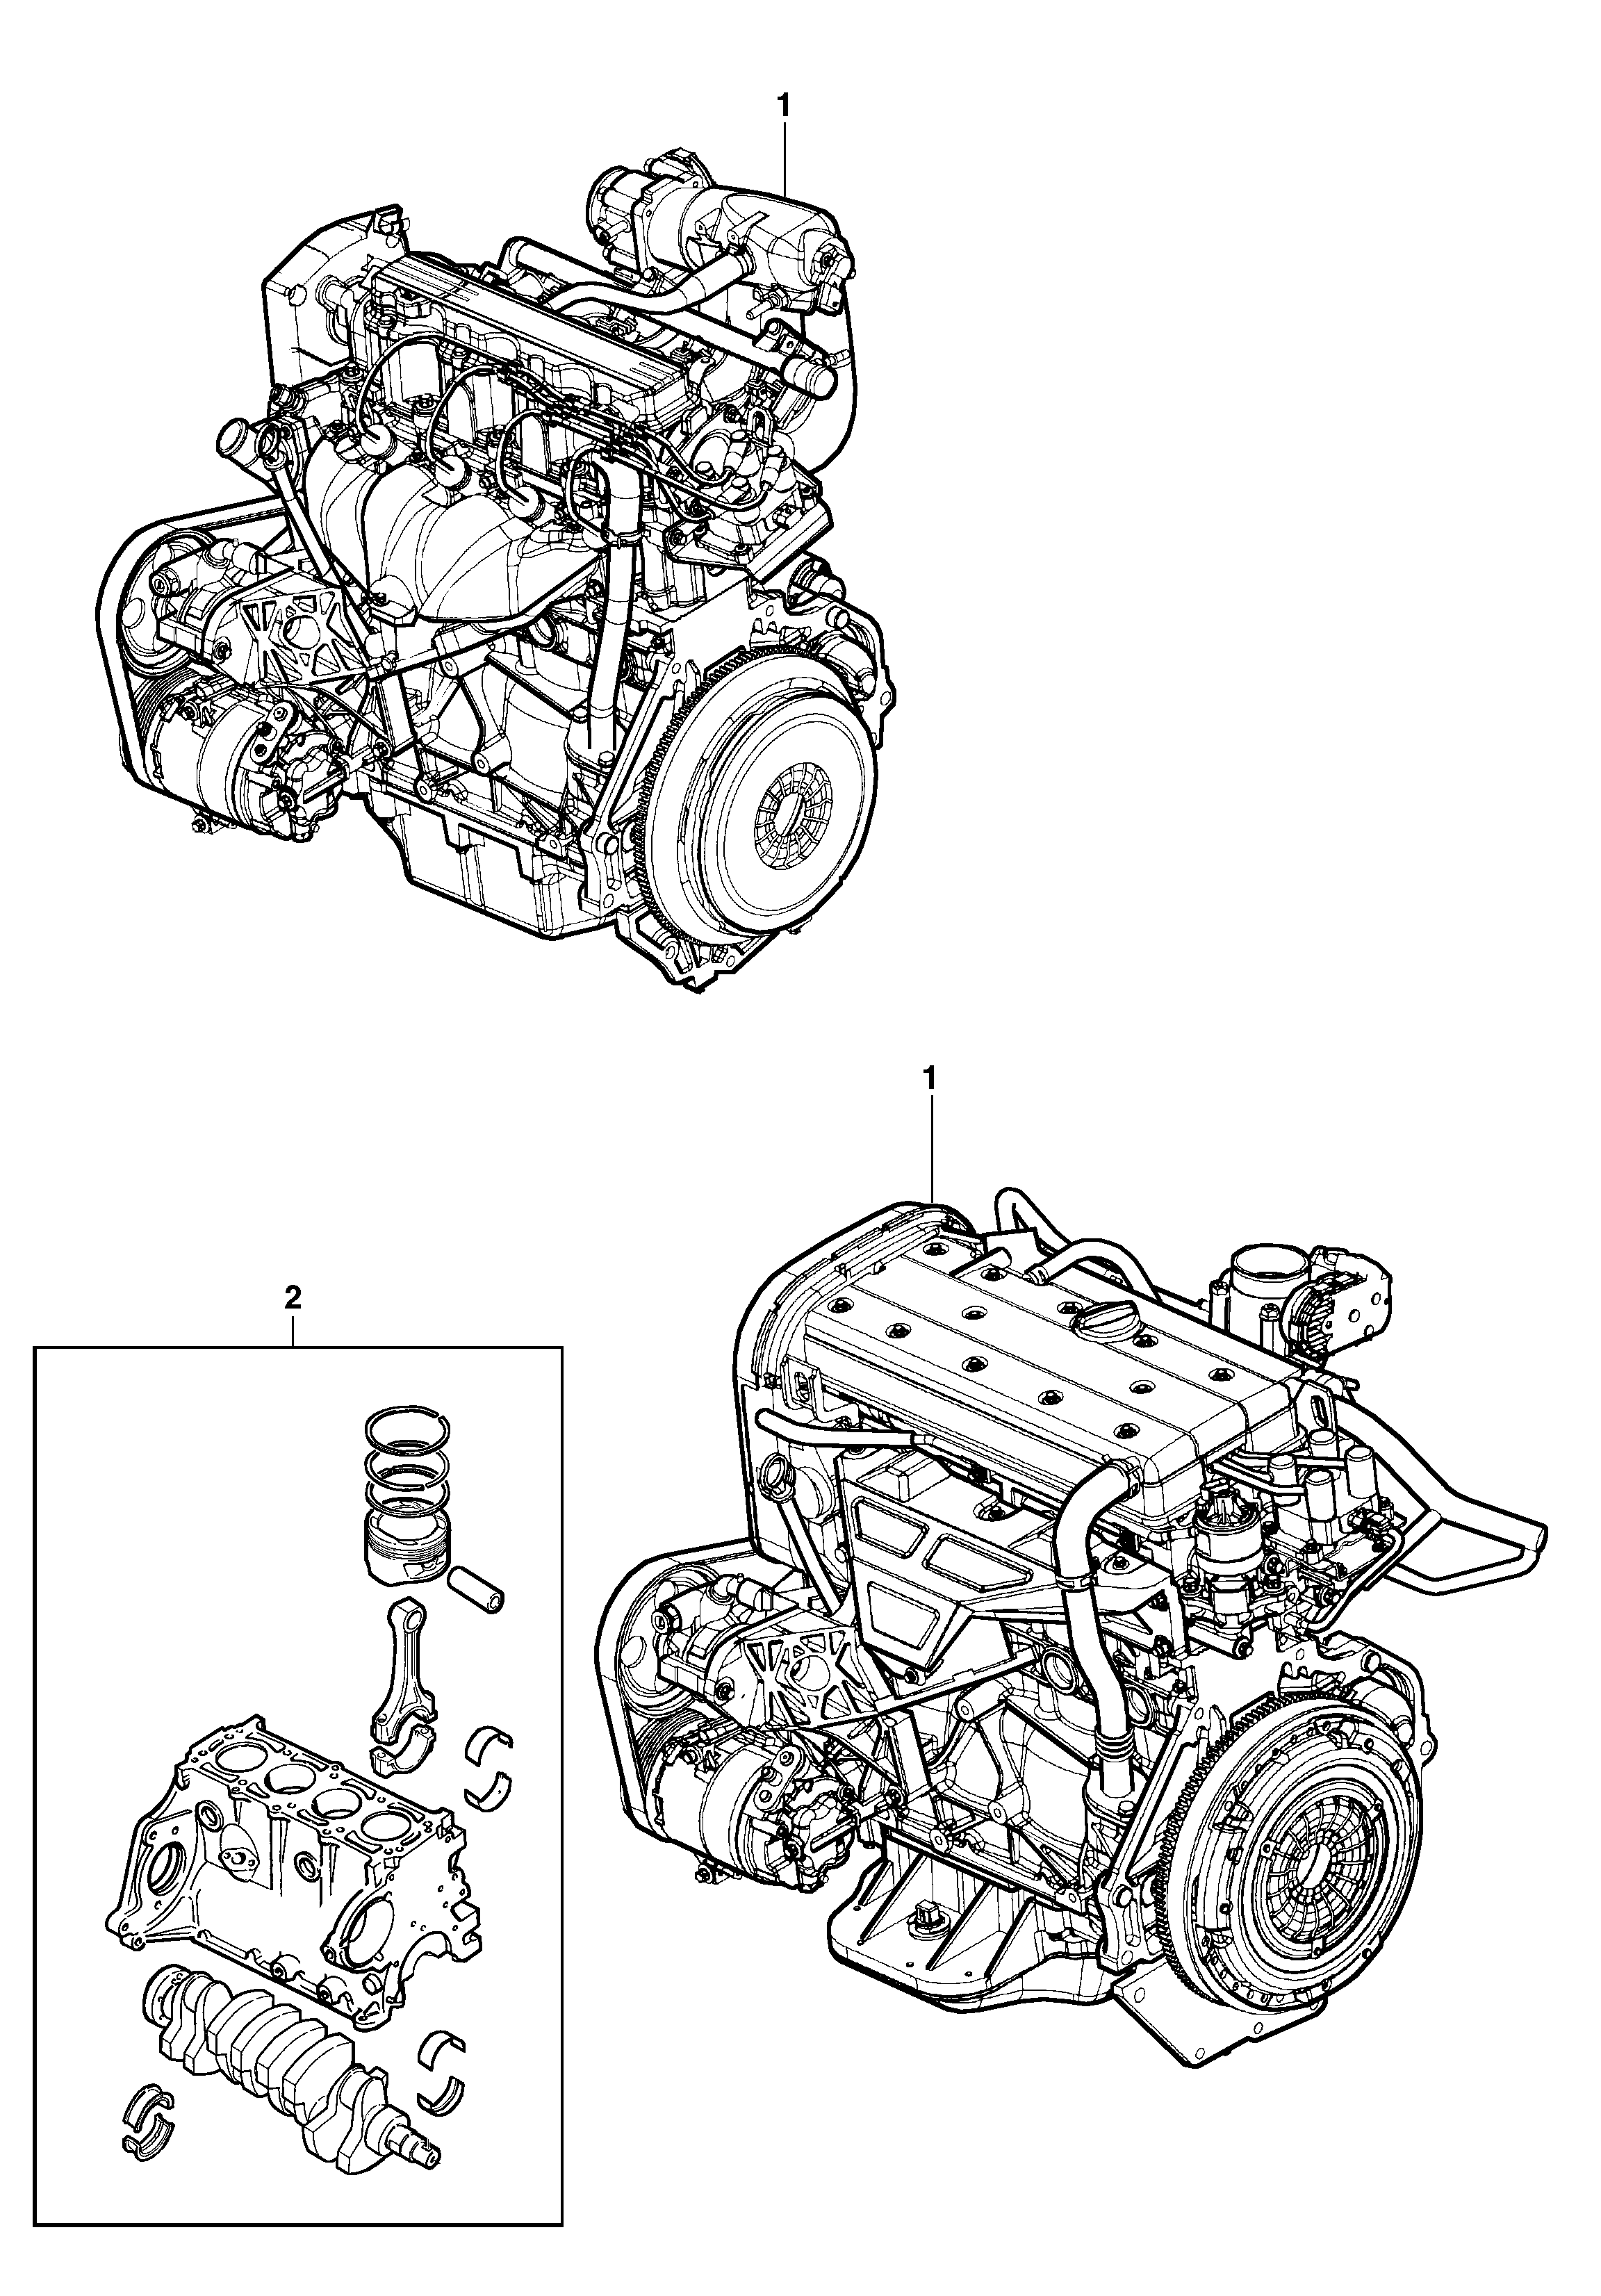 Motor completo e parcial